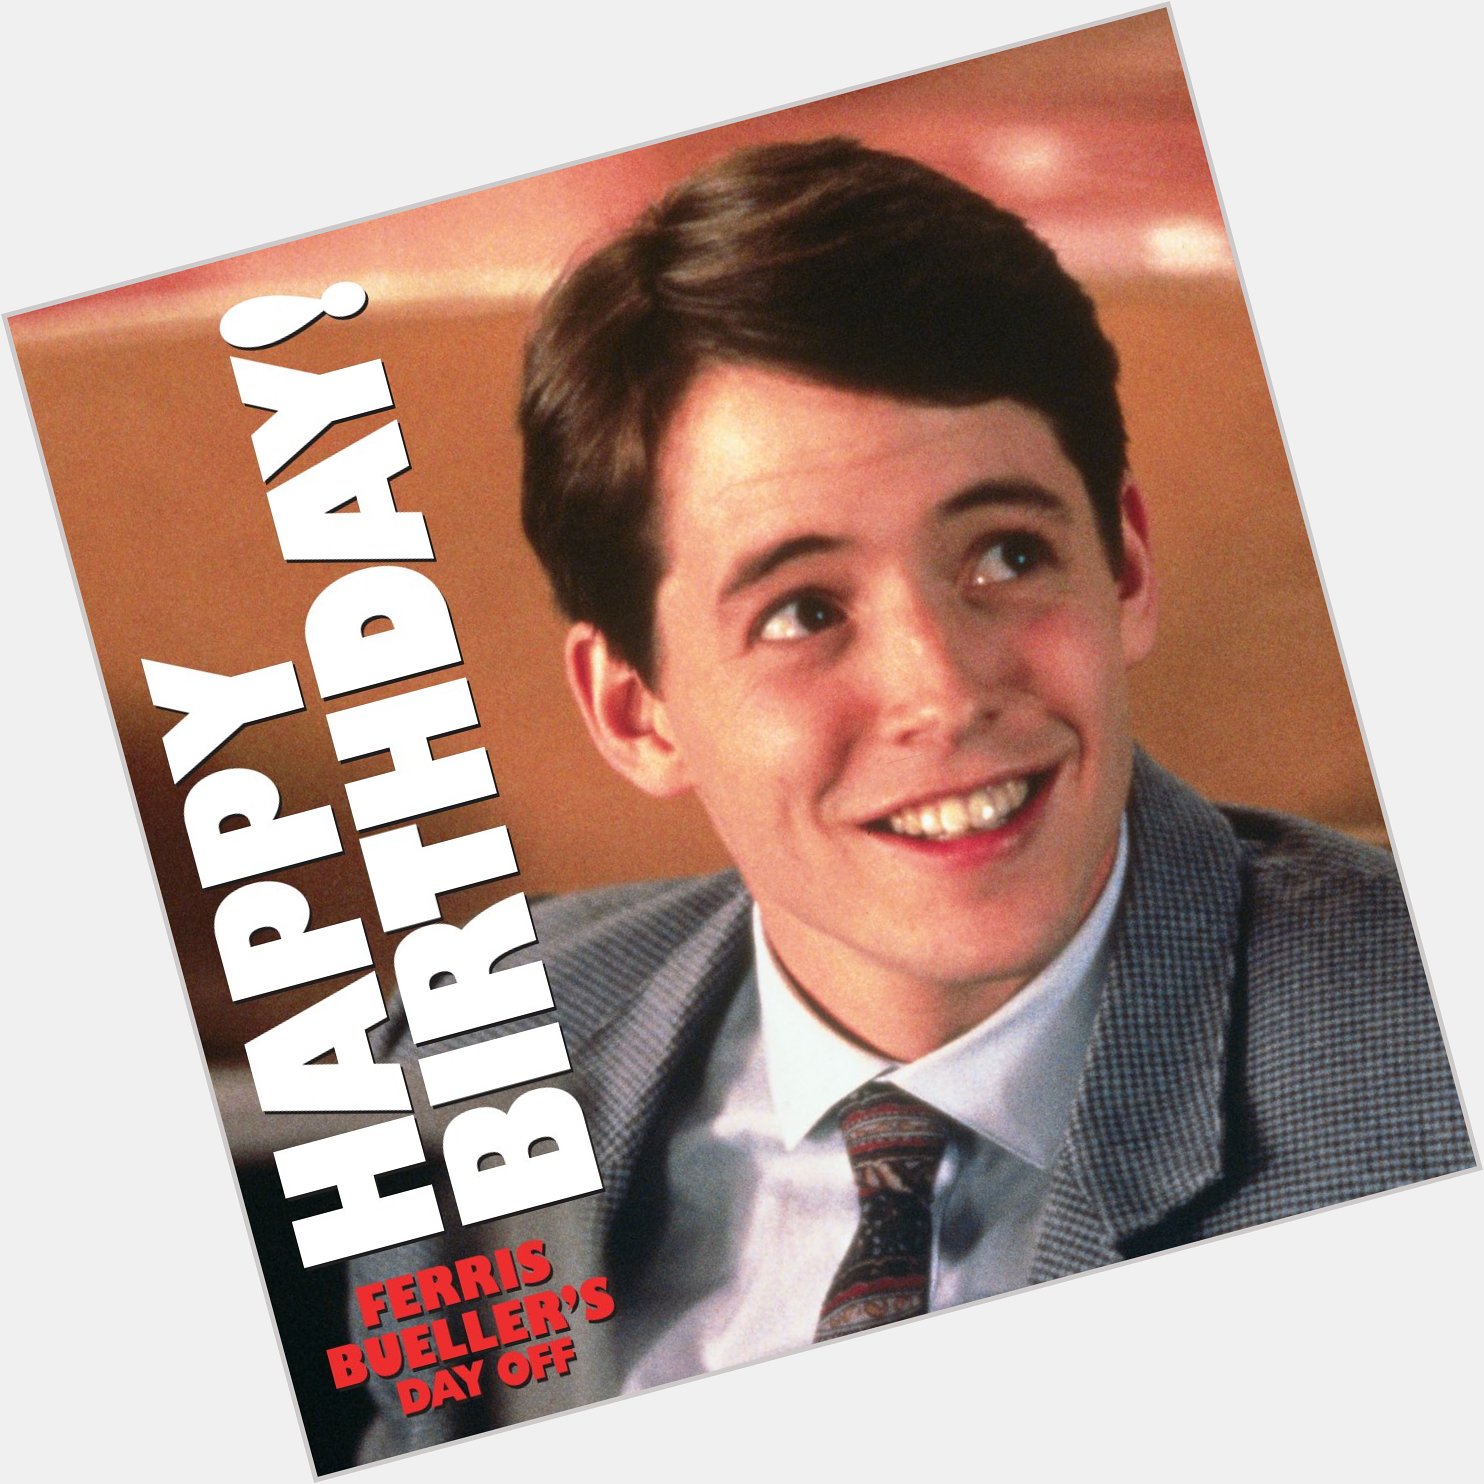 Ferris Bueller, you\re my hero. Happy birthday to Matthew Broderick! 